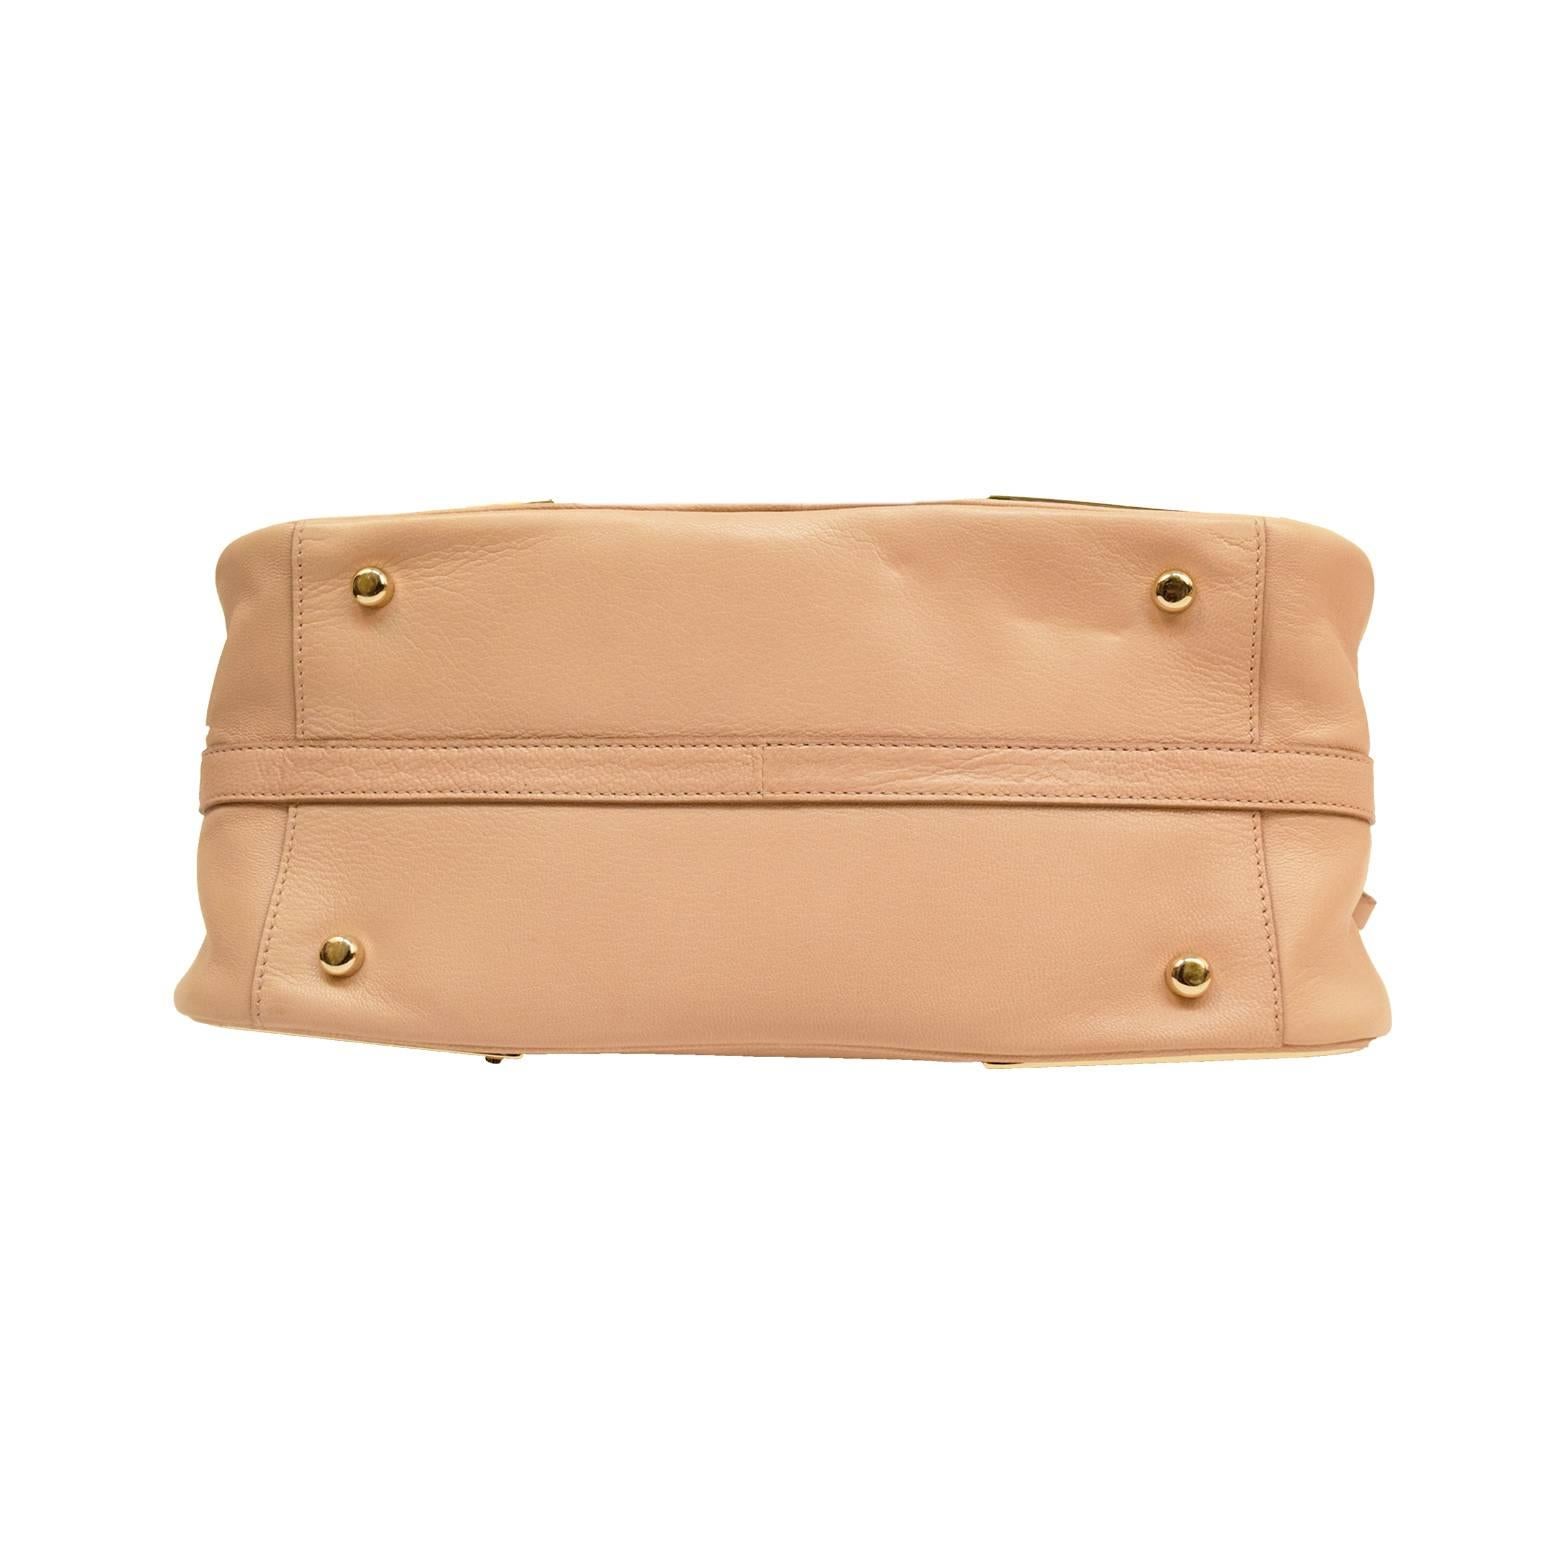 Saint Laurent Pale Pink Satchel Bag  In Excellent Condition For Sale In Henrico, VA